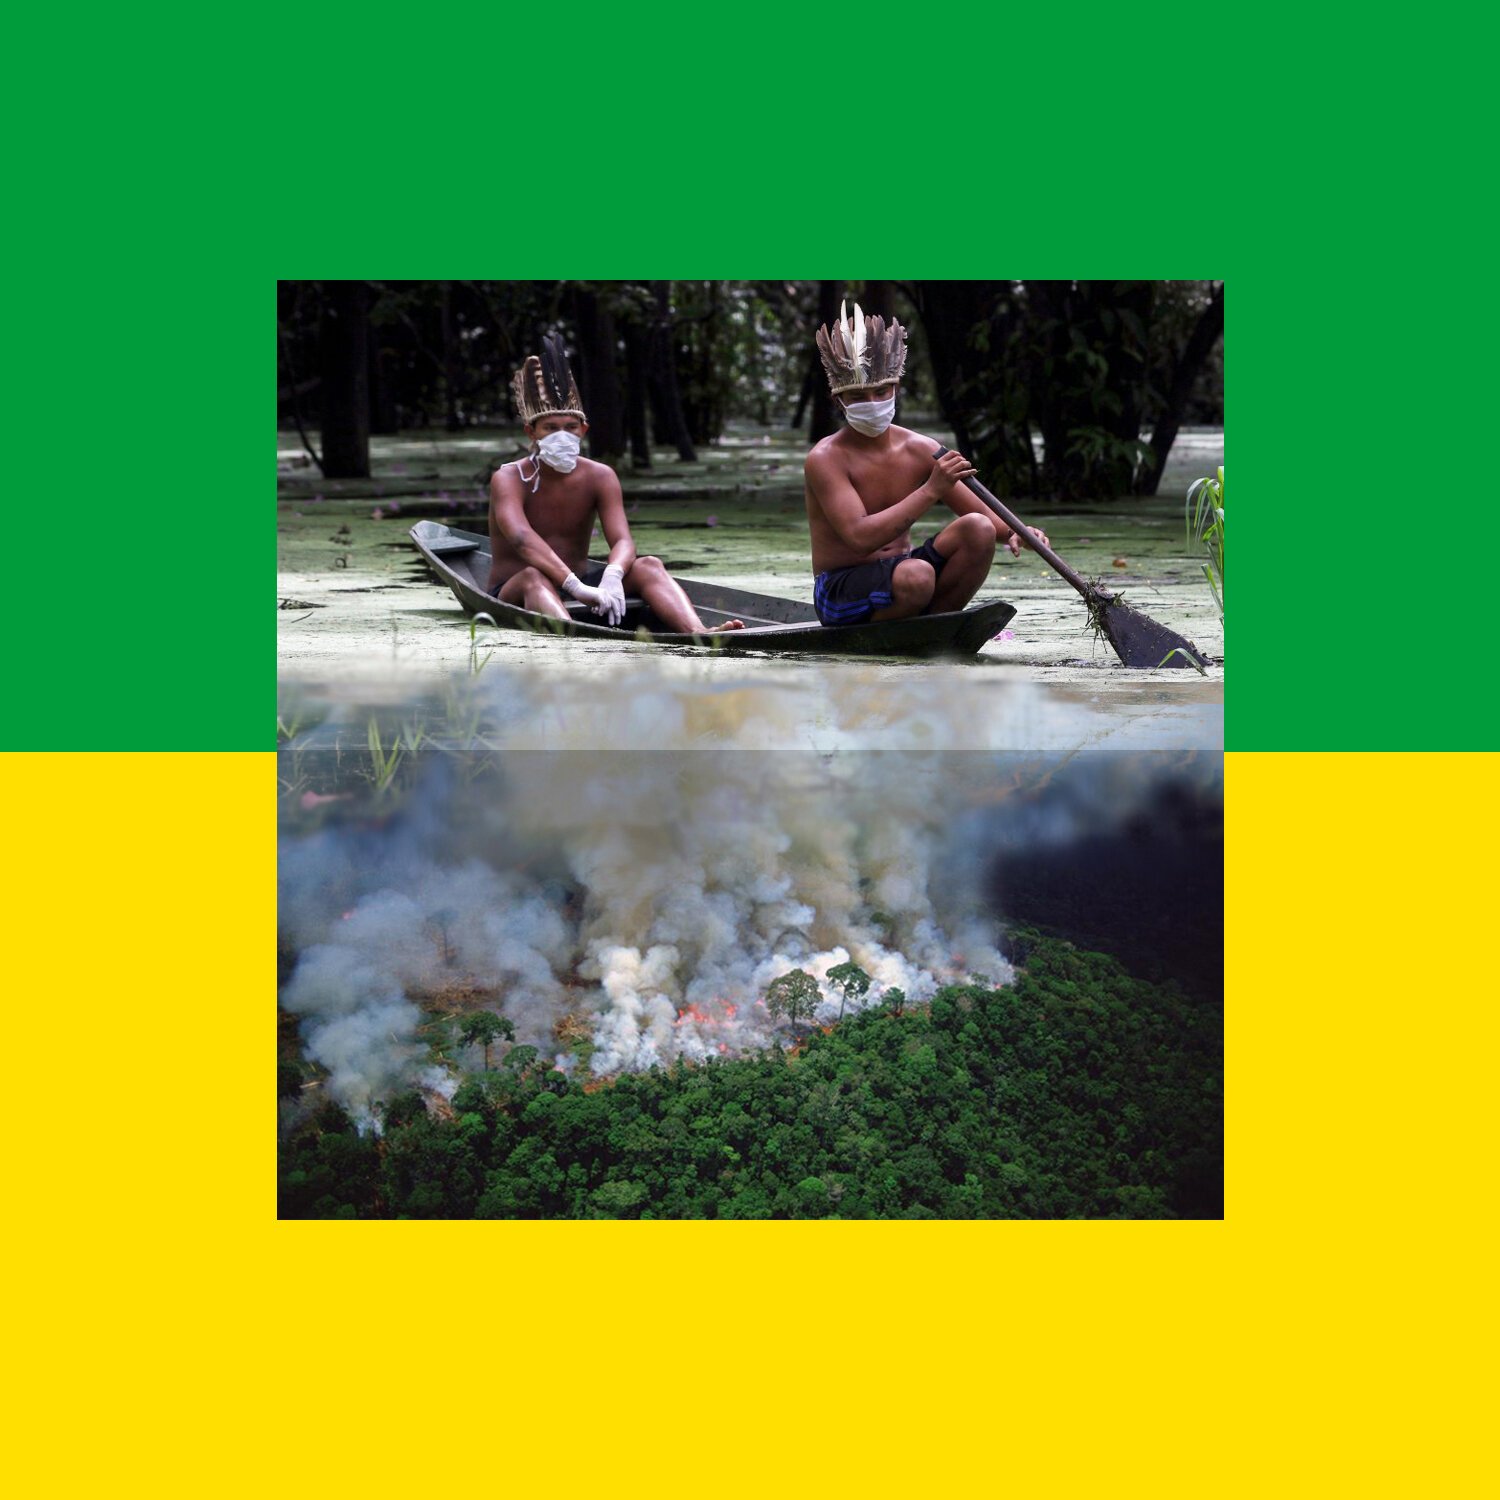 ‘Brazil Flag. Ordem e Progresso' (Order and Progress)